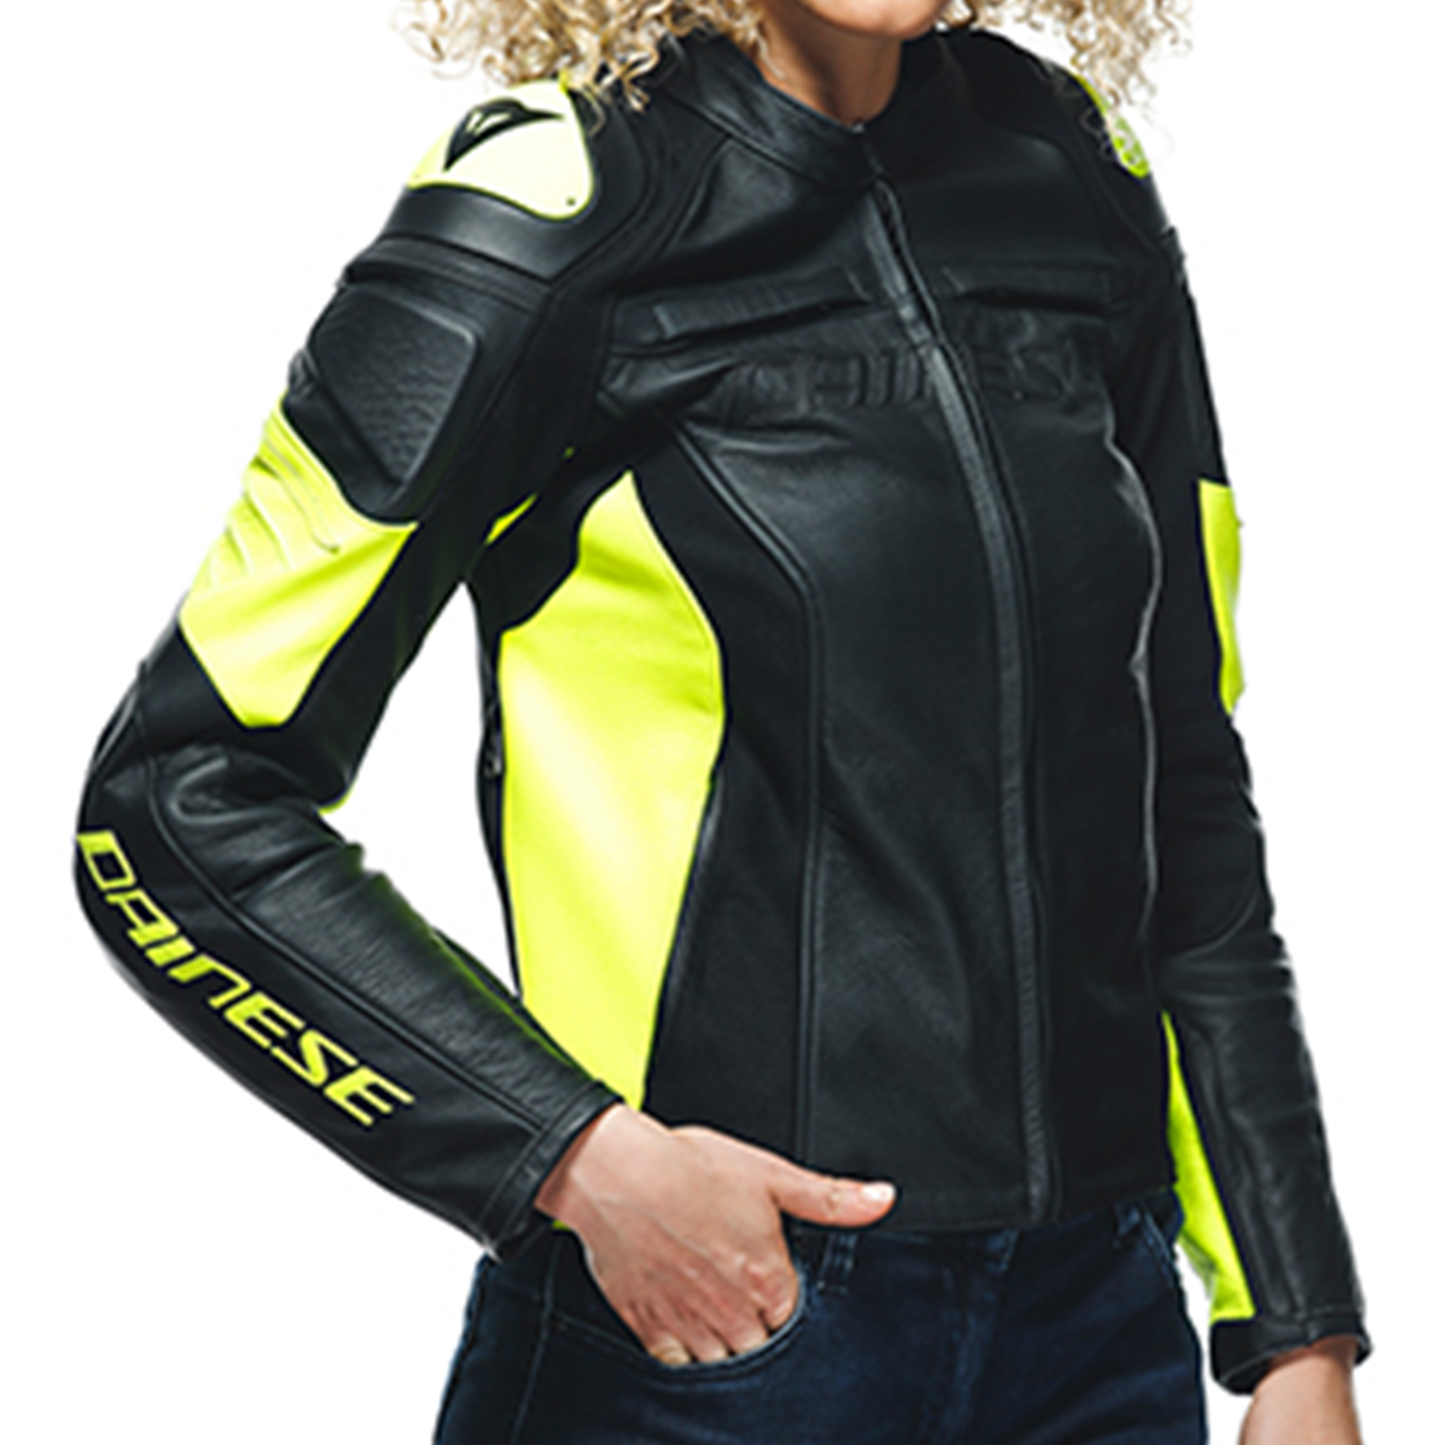 Dainese Racing 4 Lady Leather Jacket - Black/Flo Yellow (620)